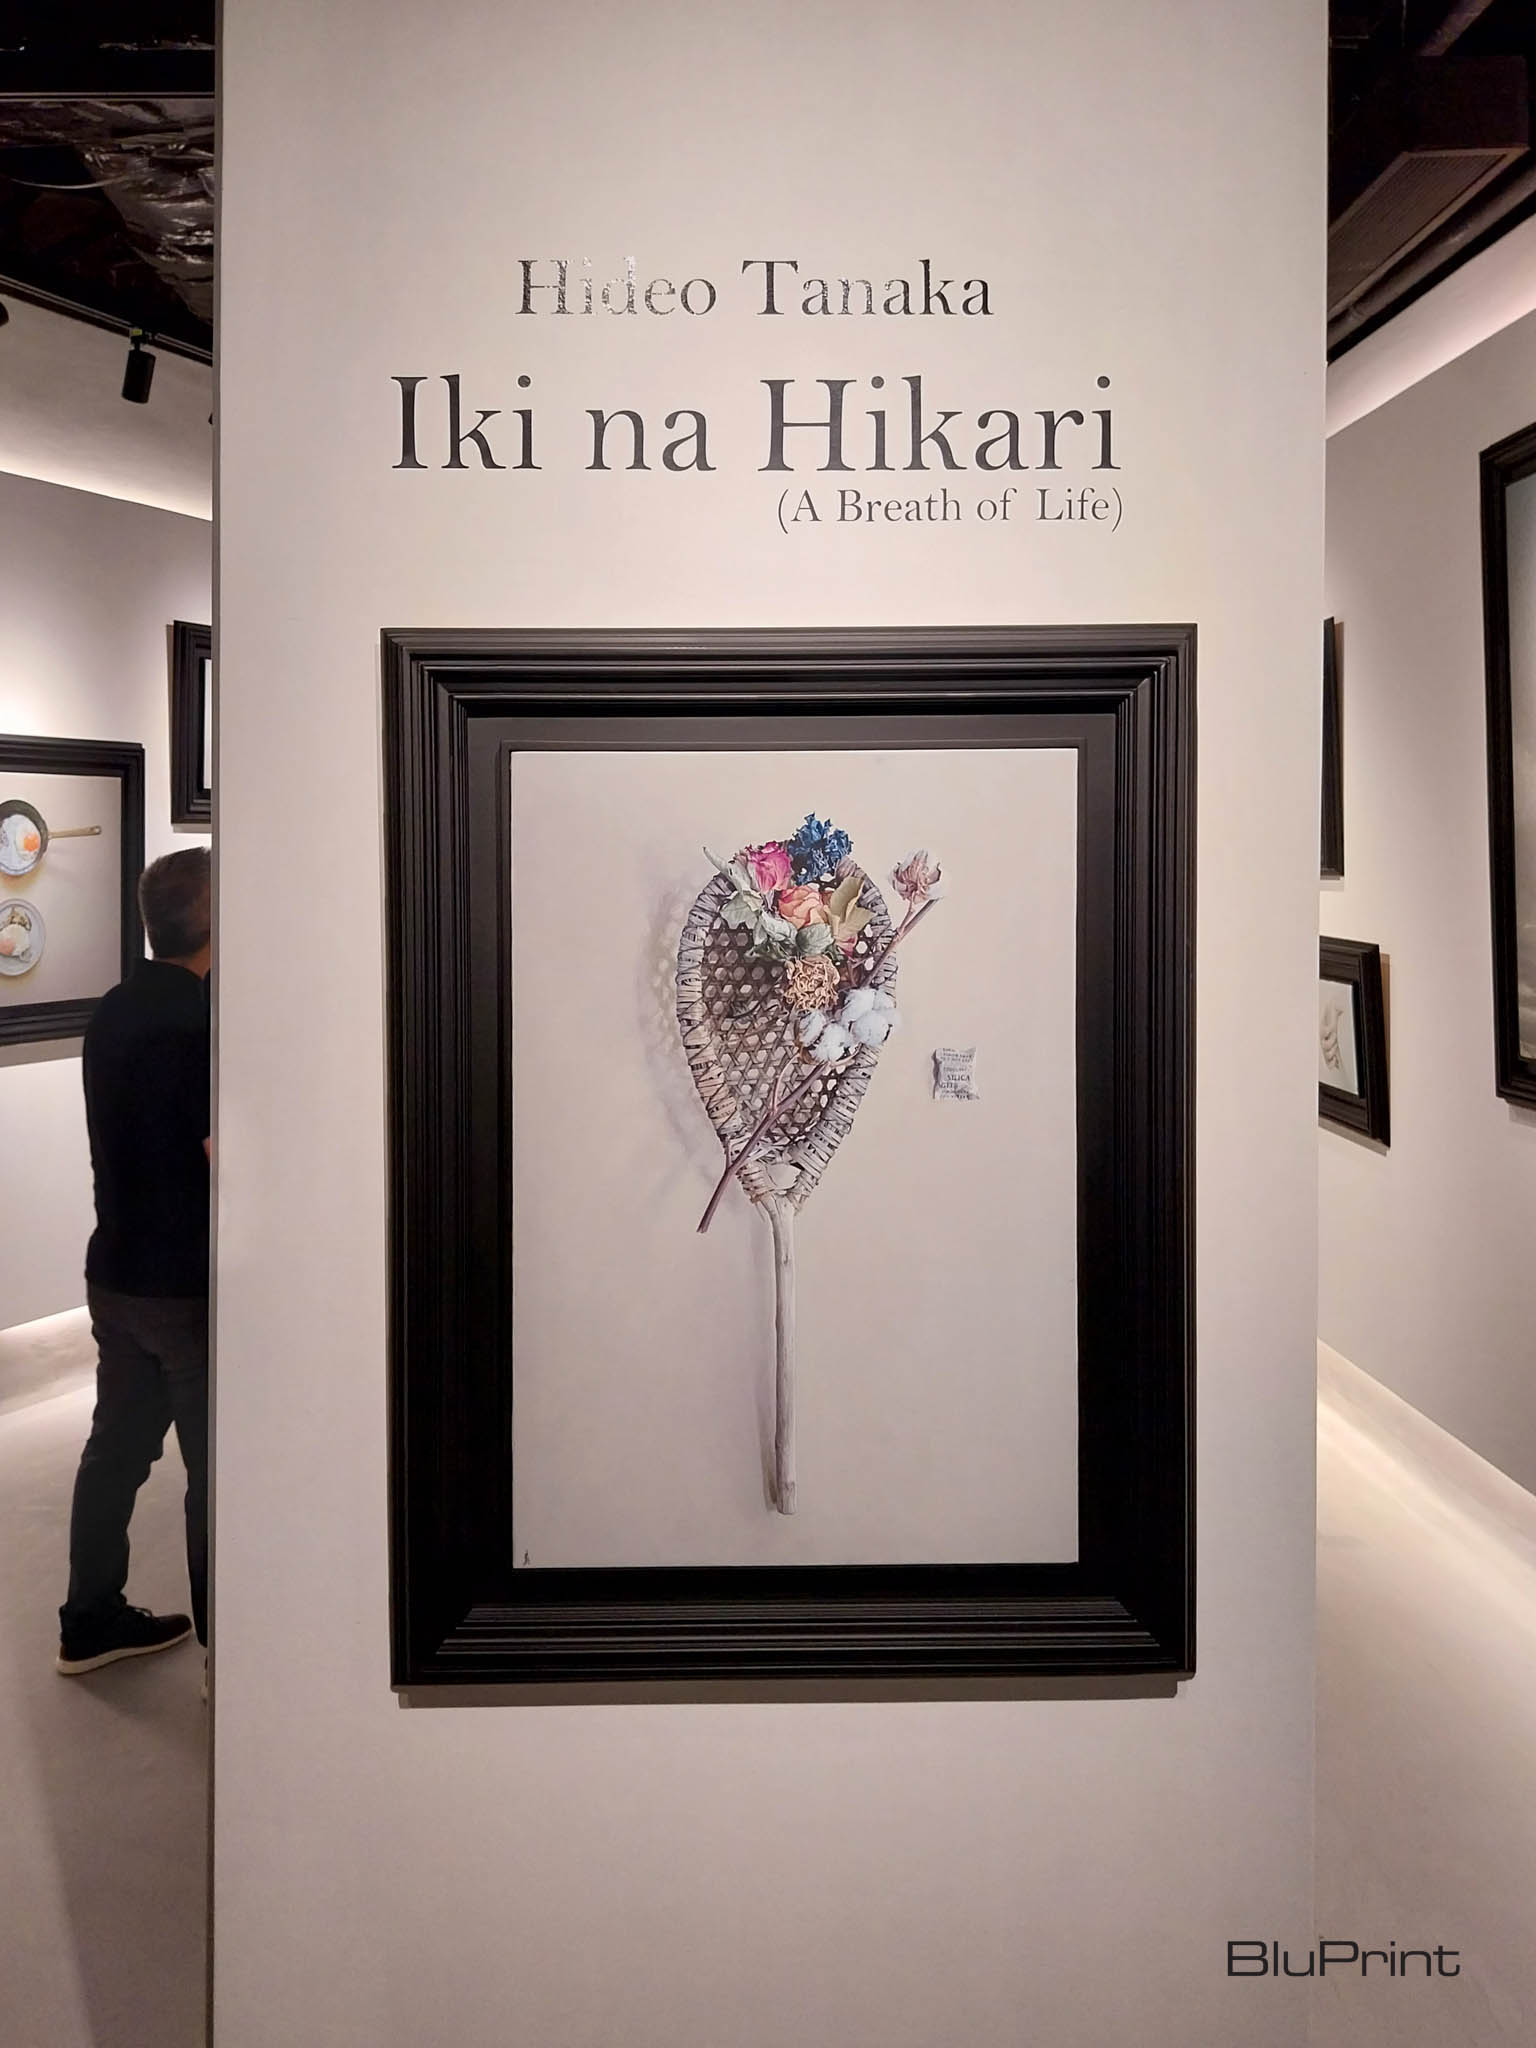 A painting for Hideo Tanaka's "Iki na Hikari" at Galerie Stephanie x Cartellino. Photo by Elle Yap.